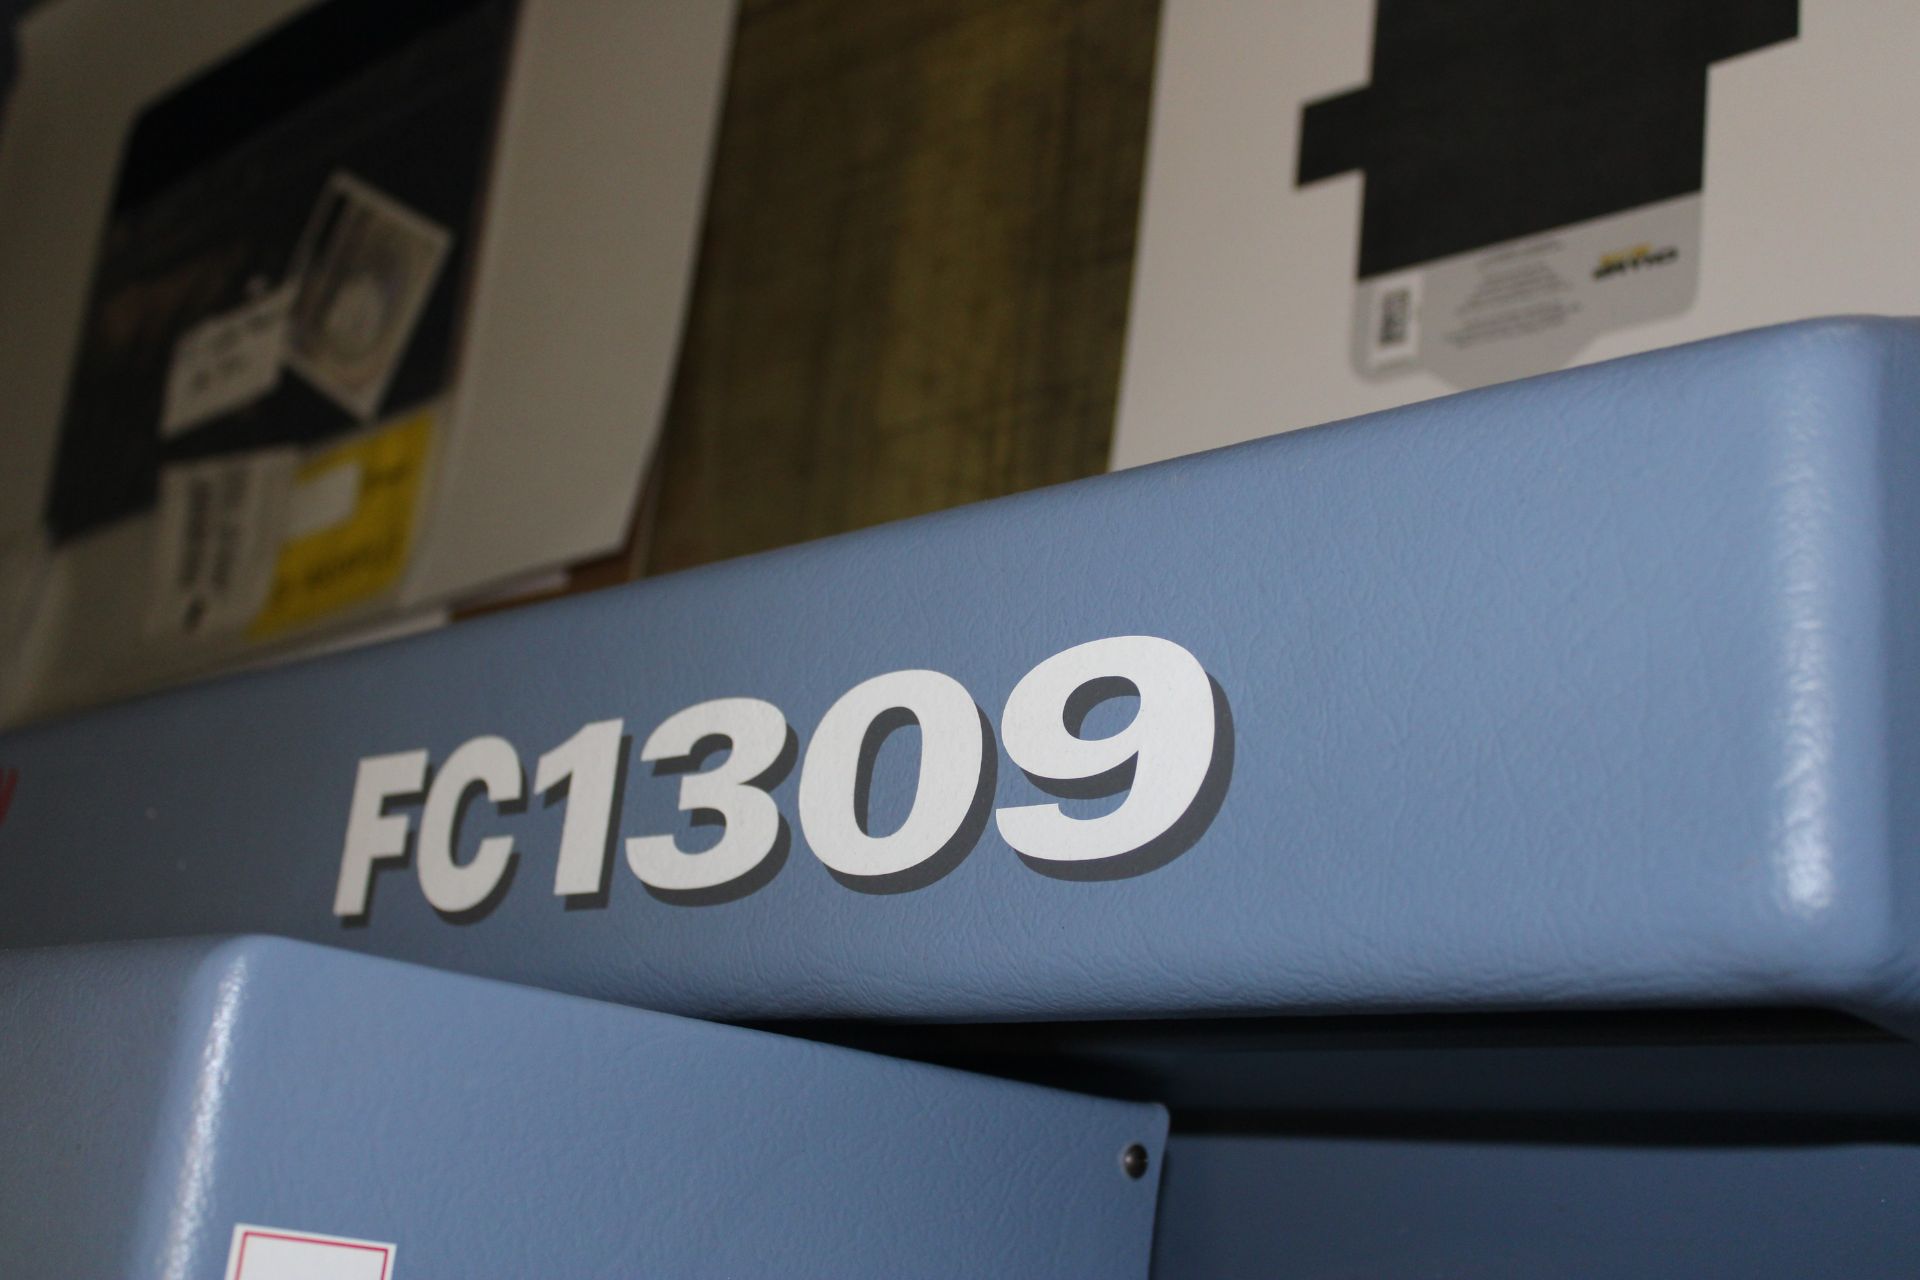 Kongsberg Model FC1309 Folding Carton Plotter Includes a Dell Dimension Computer/Monitor/Keyboard/ - Image 3 of 3